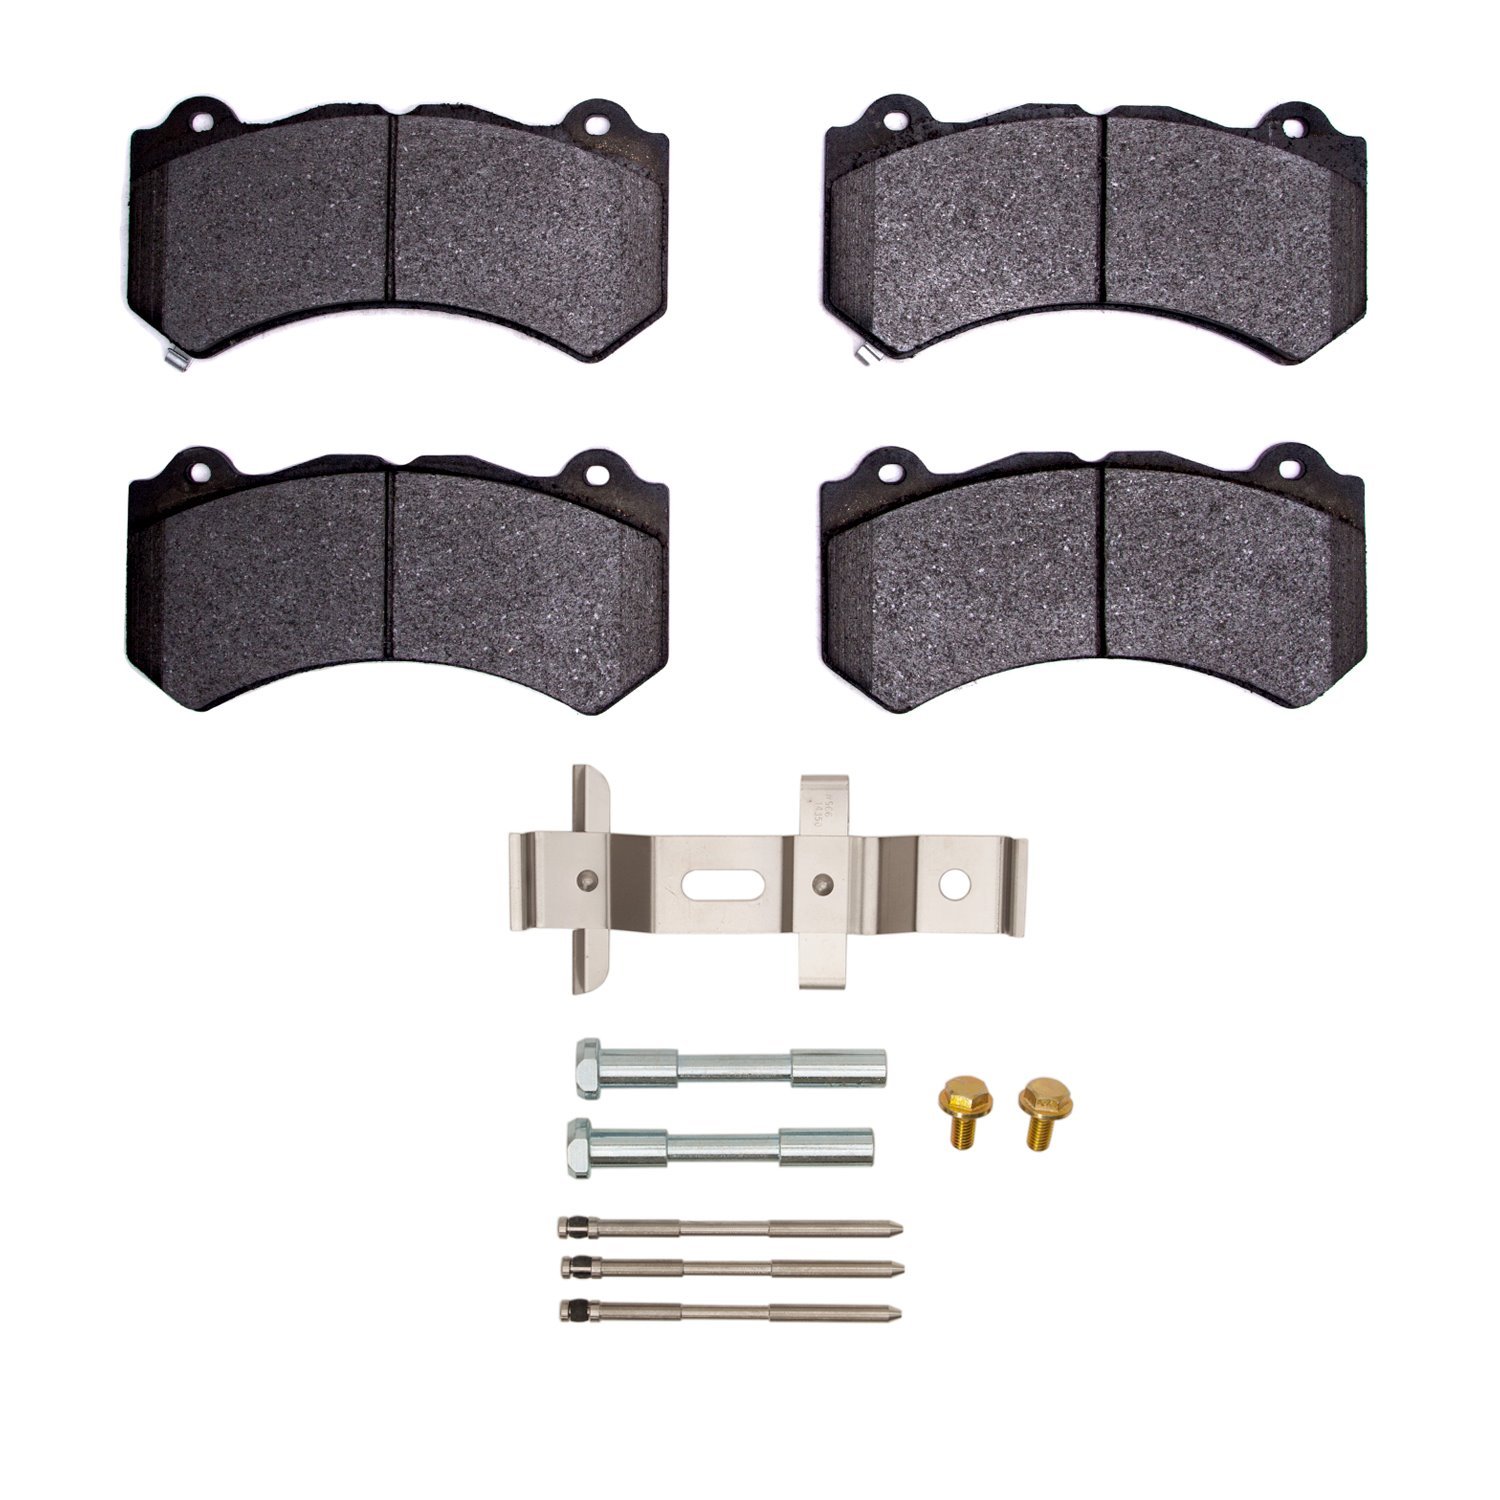 1115-1405-01 Active Performance Brake Pads & Hardware Kit, Fits Select Multiple Makes/Models, Position: Front